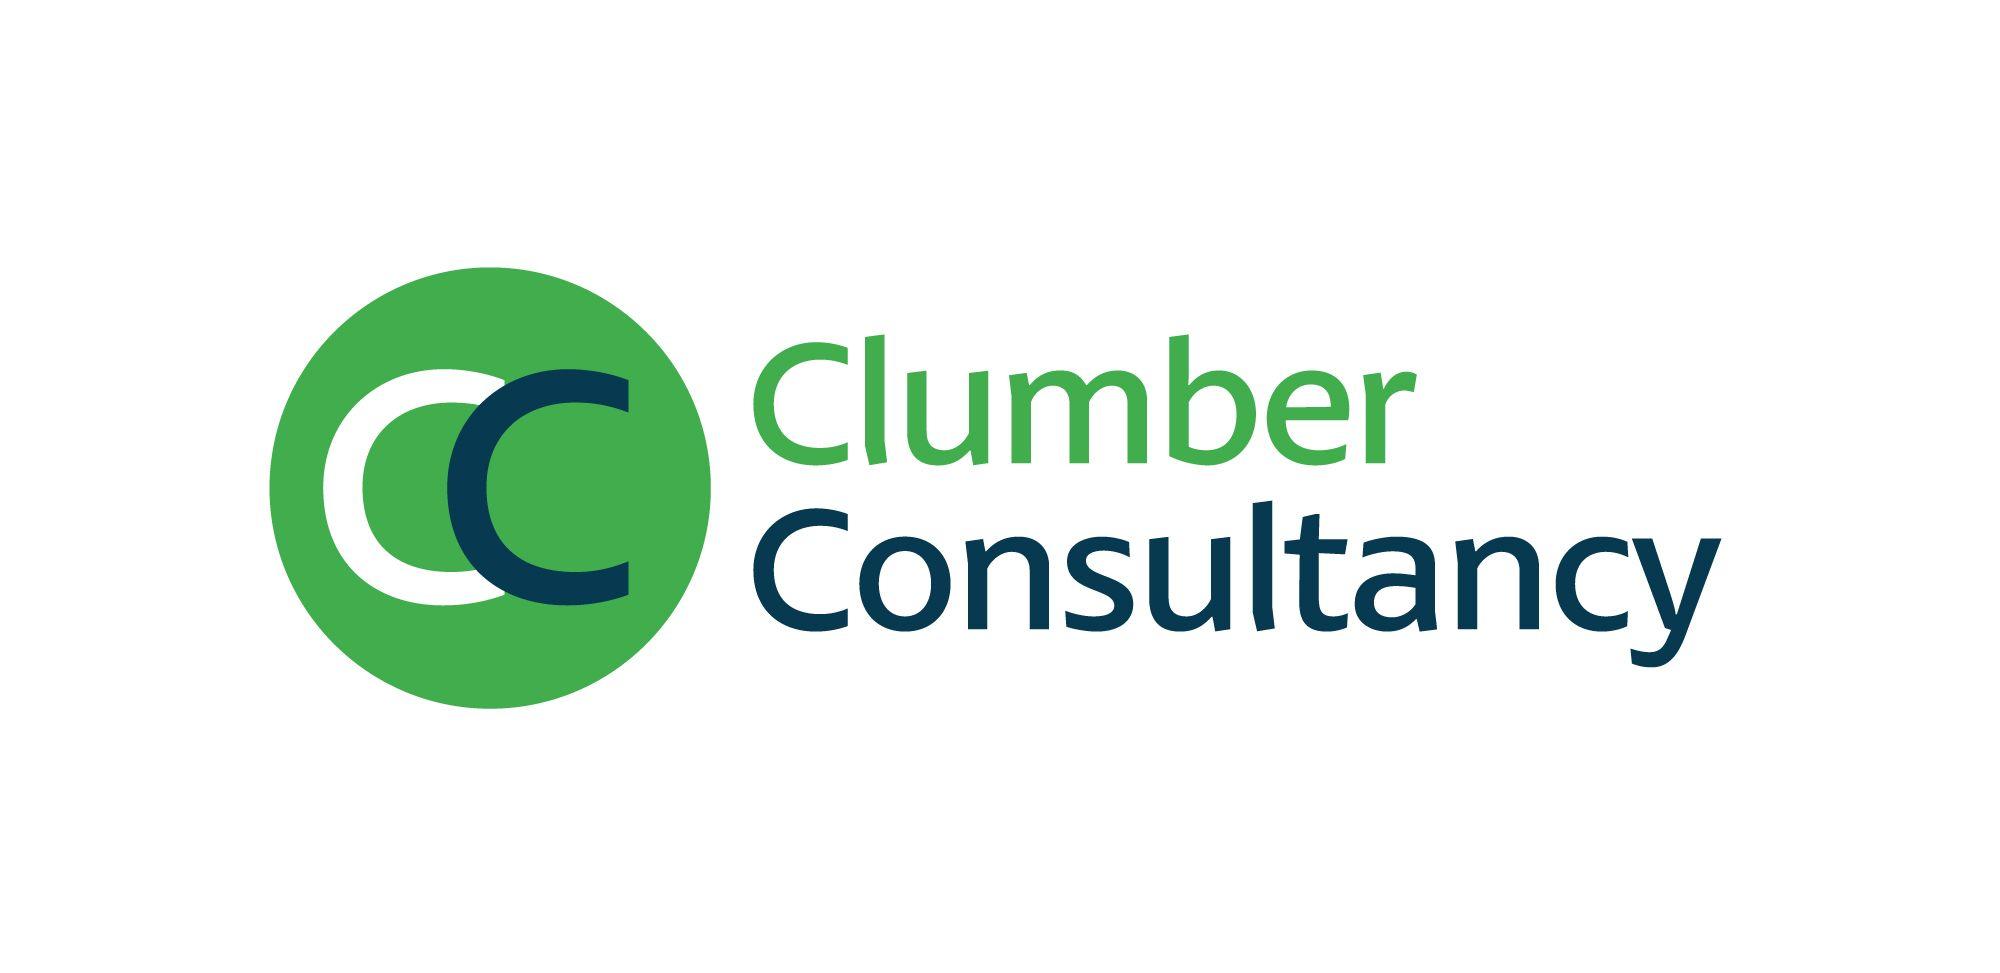 Woodhead Logo - clumber-consultancy-logo - Woodhead Enterprise